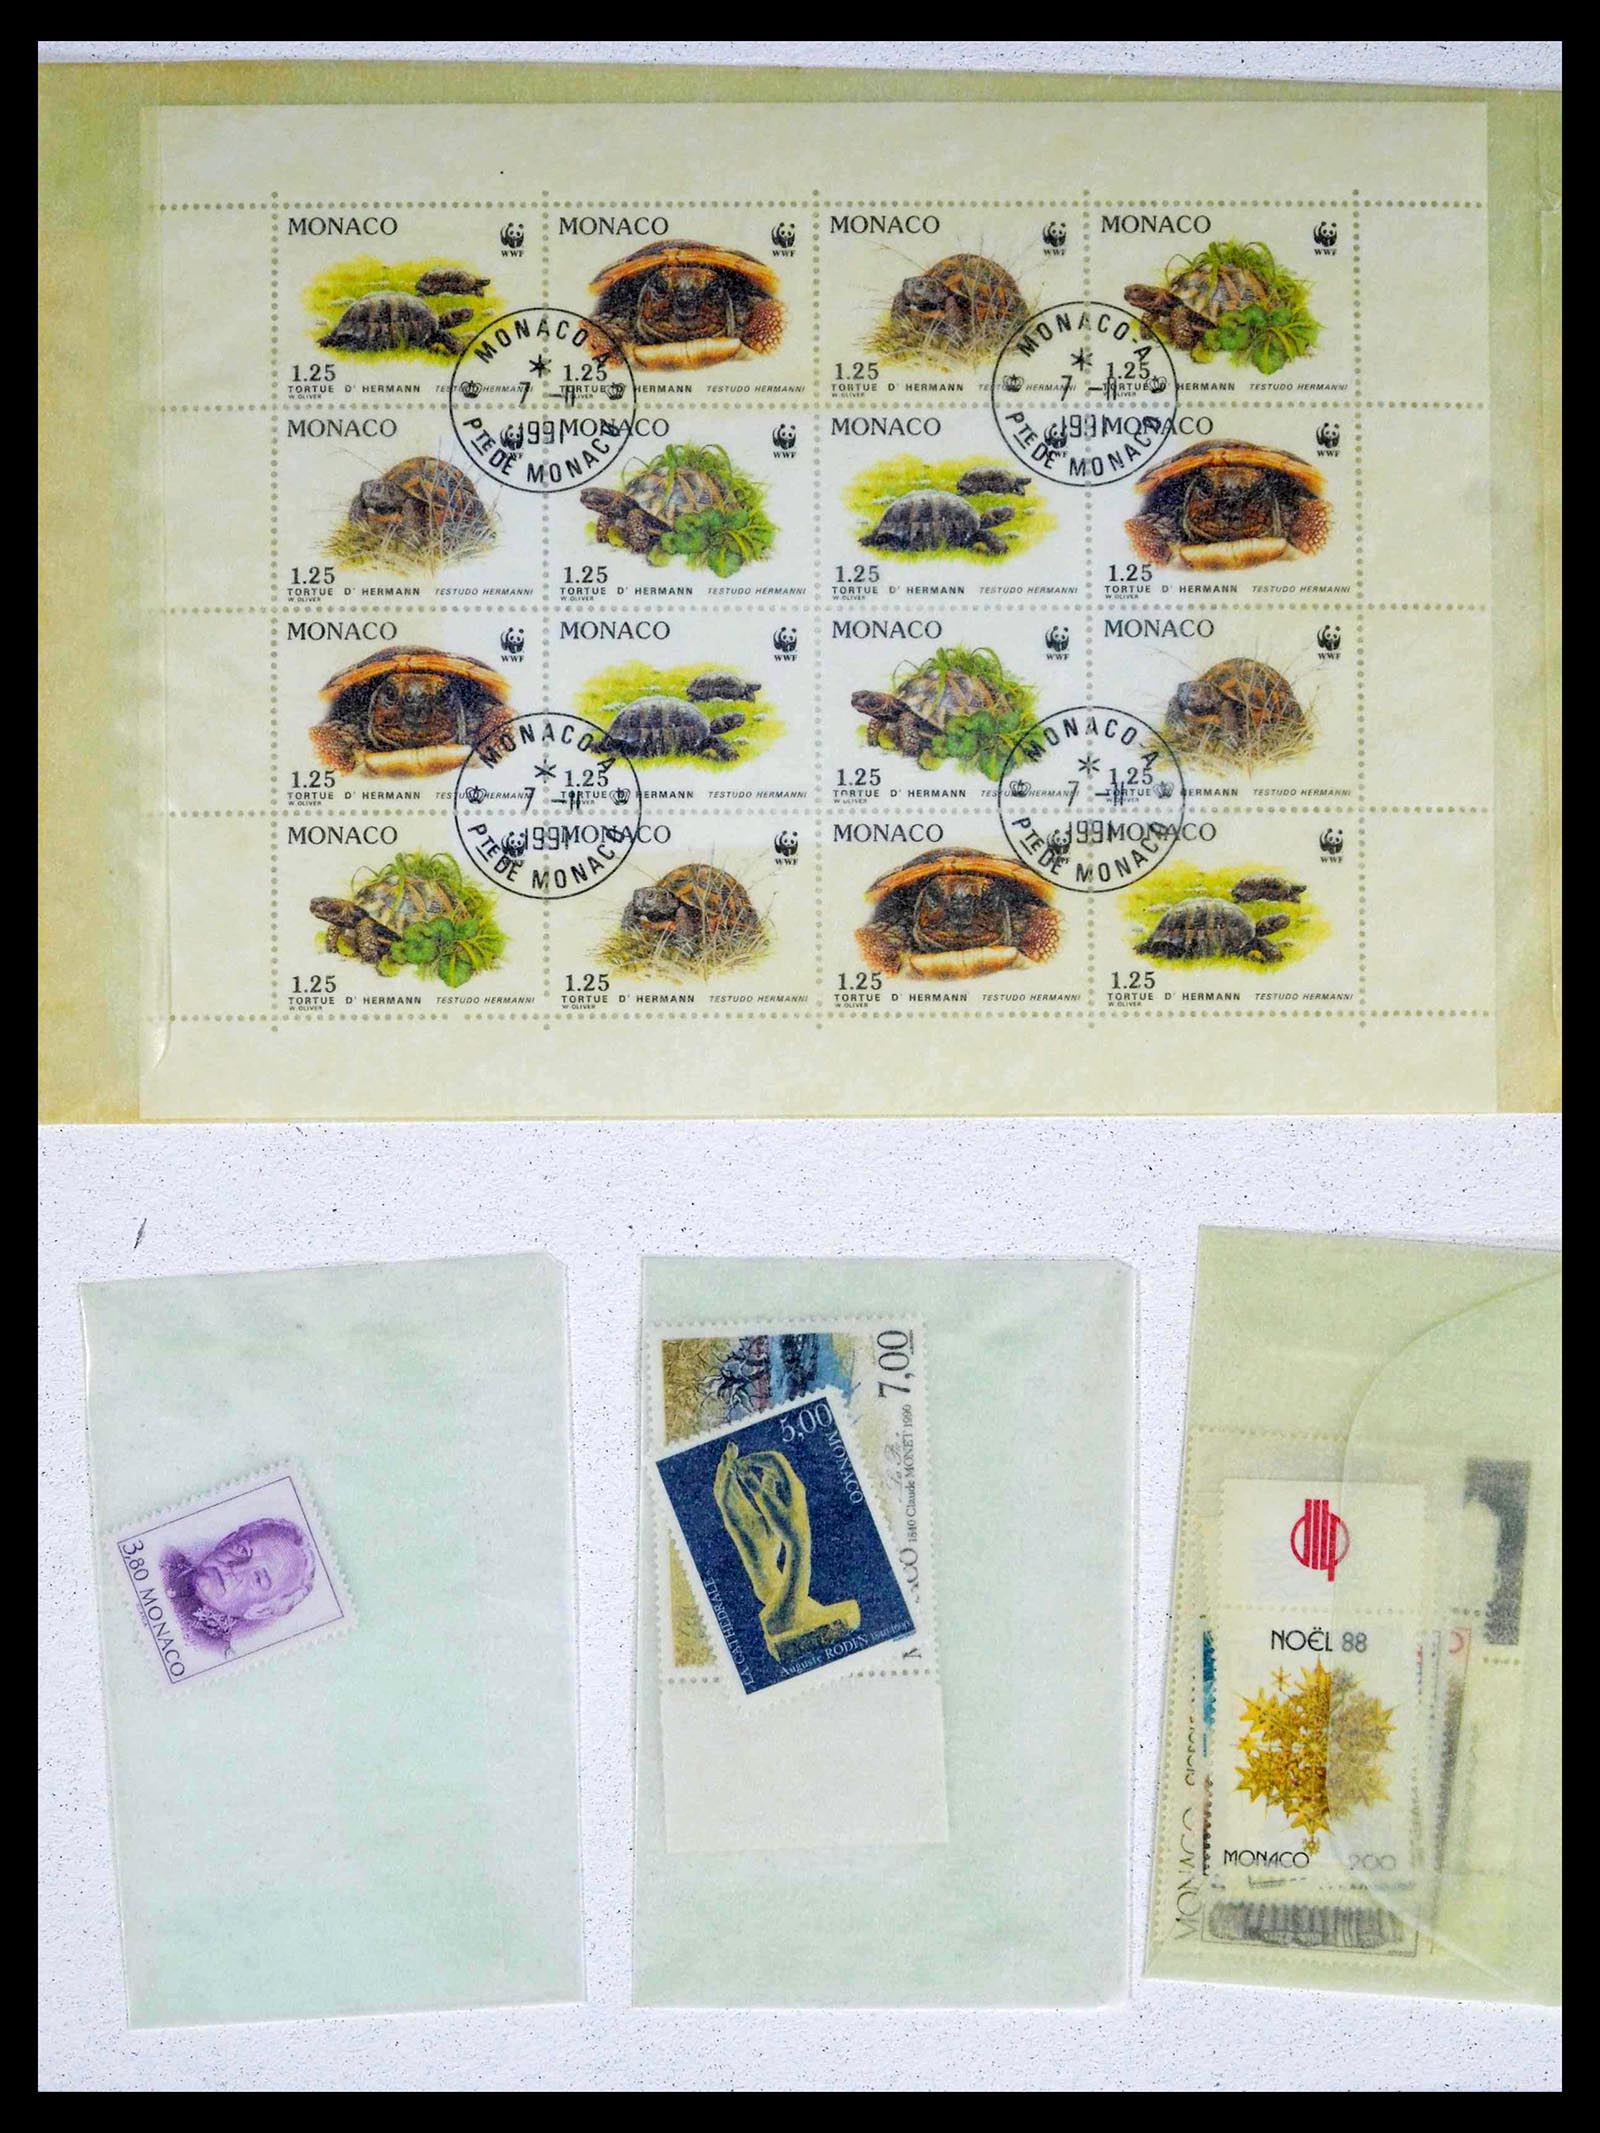 39211 0193 - Stamp collection 39211 Monaco 1885-1983.